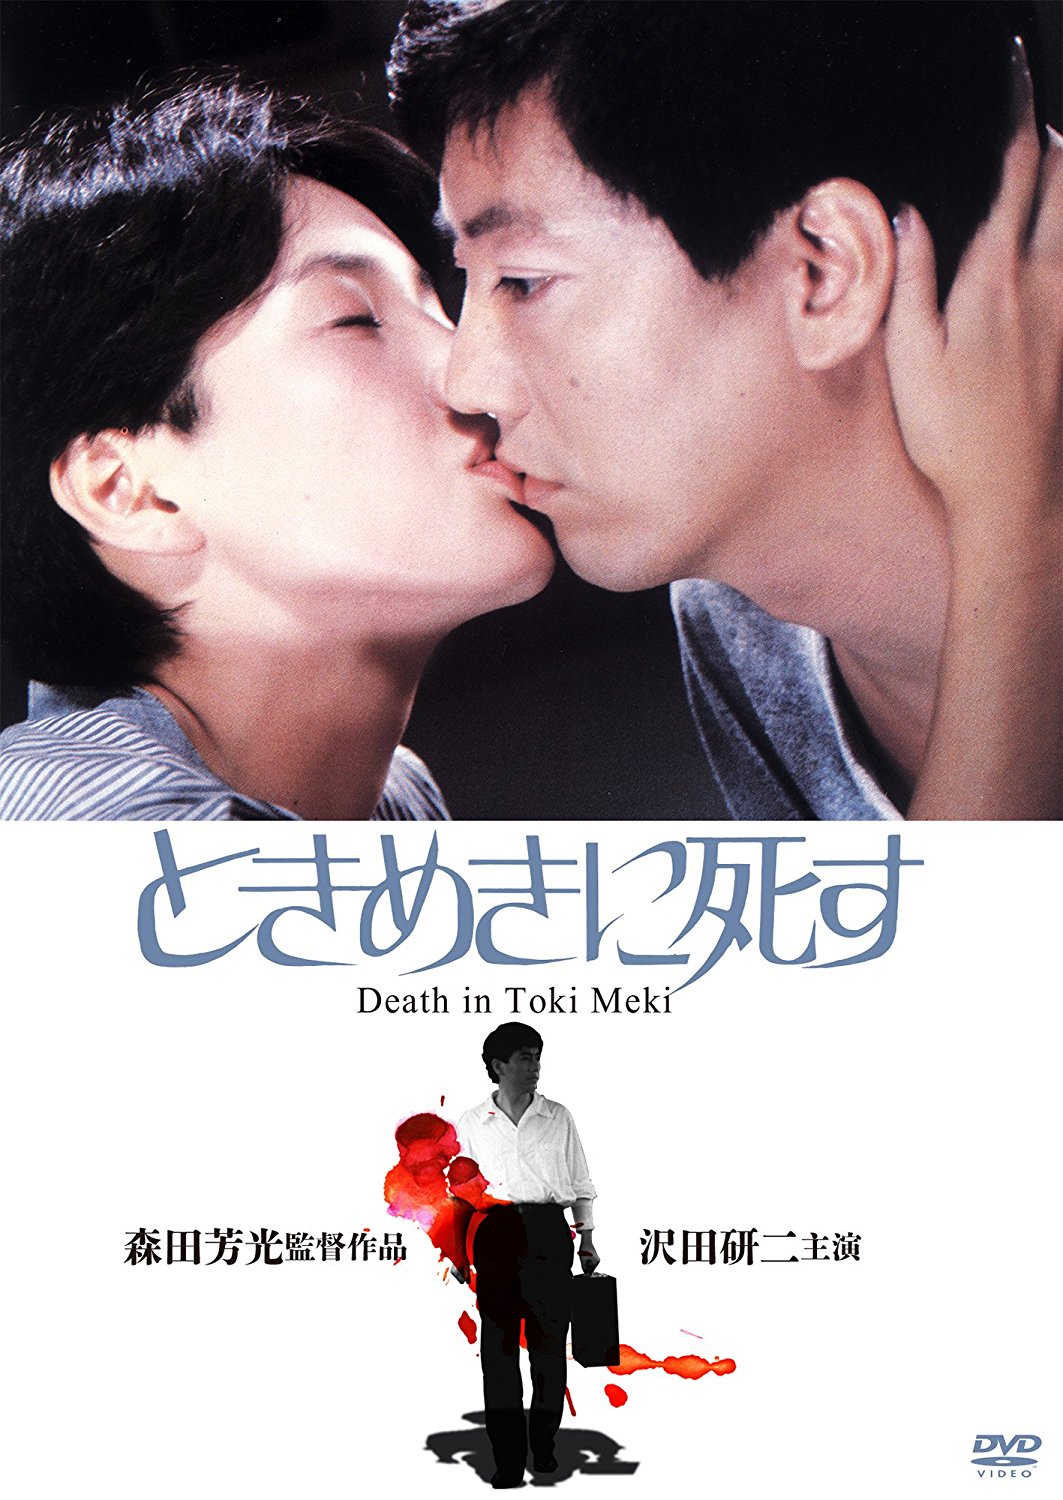 Deaths in Tokimeki (1984) Screenshot 1